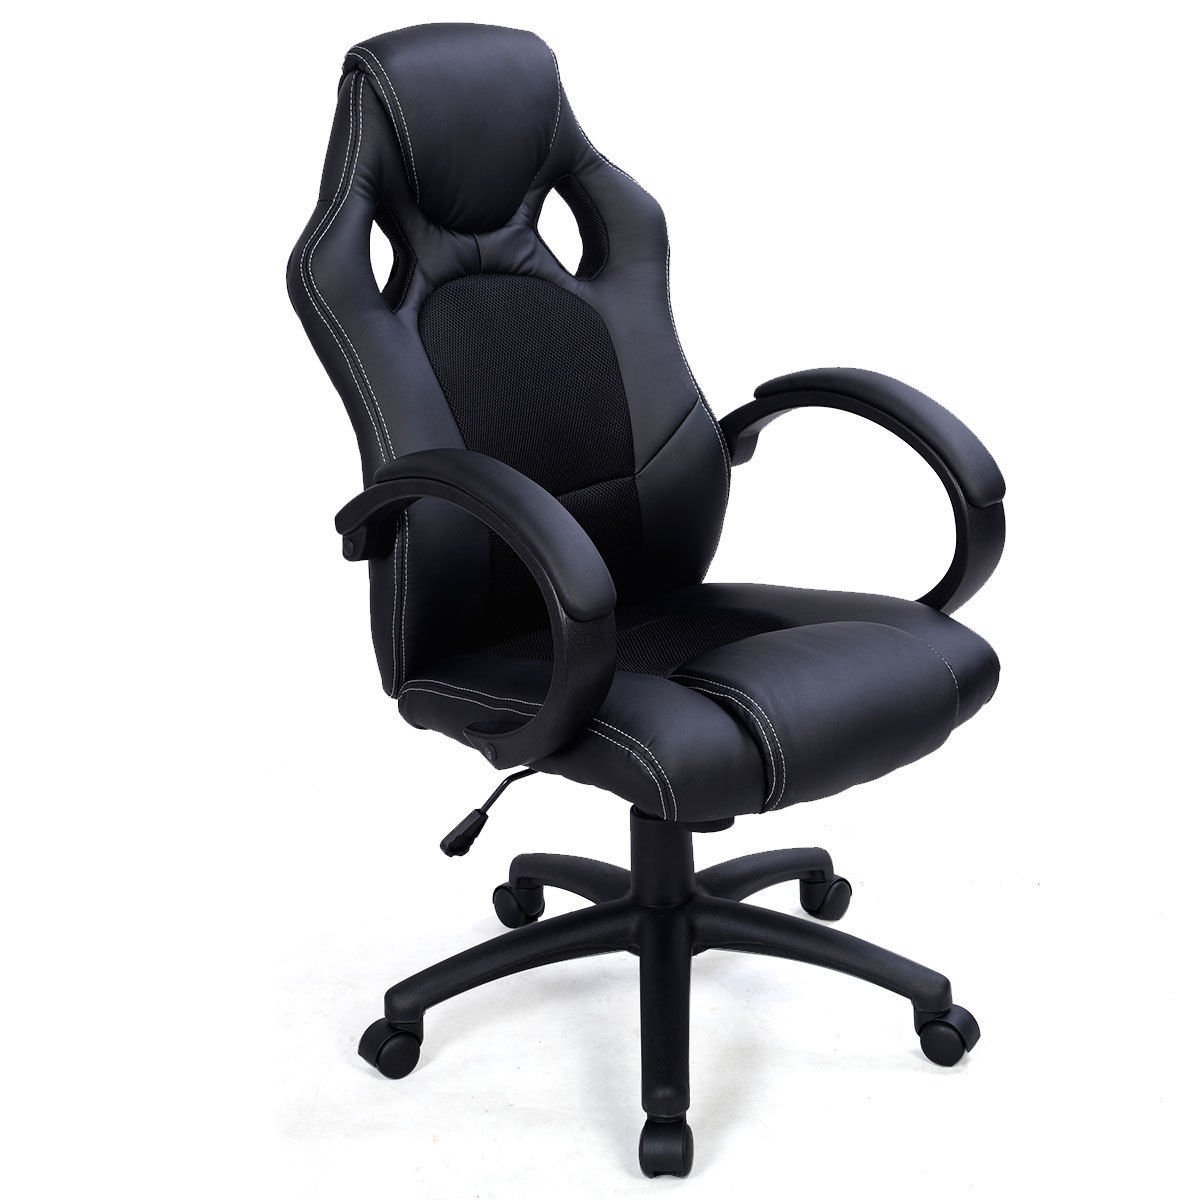 Von Racer Gaming Chair Review: Ergonomic High-Back & Massage Chair